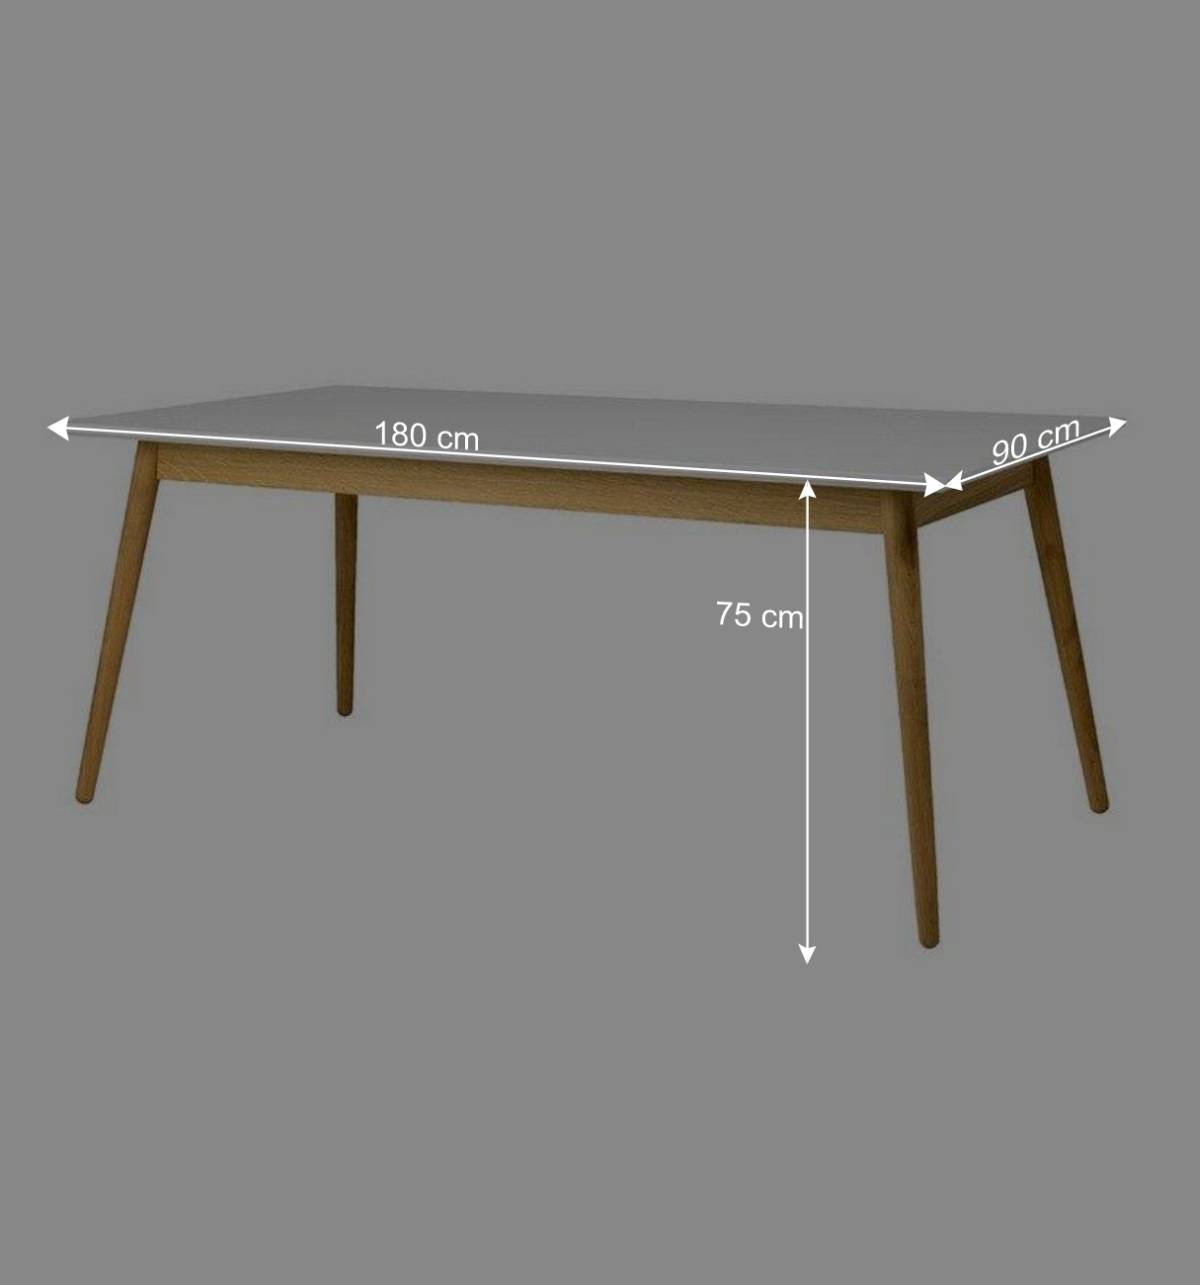 Tisch mit weißer Platt MDF lackiert Vudian & Holzgestell Eiche geölt